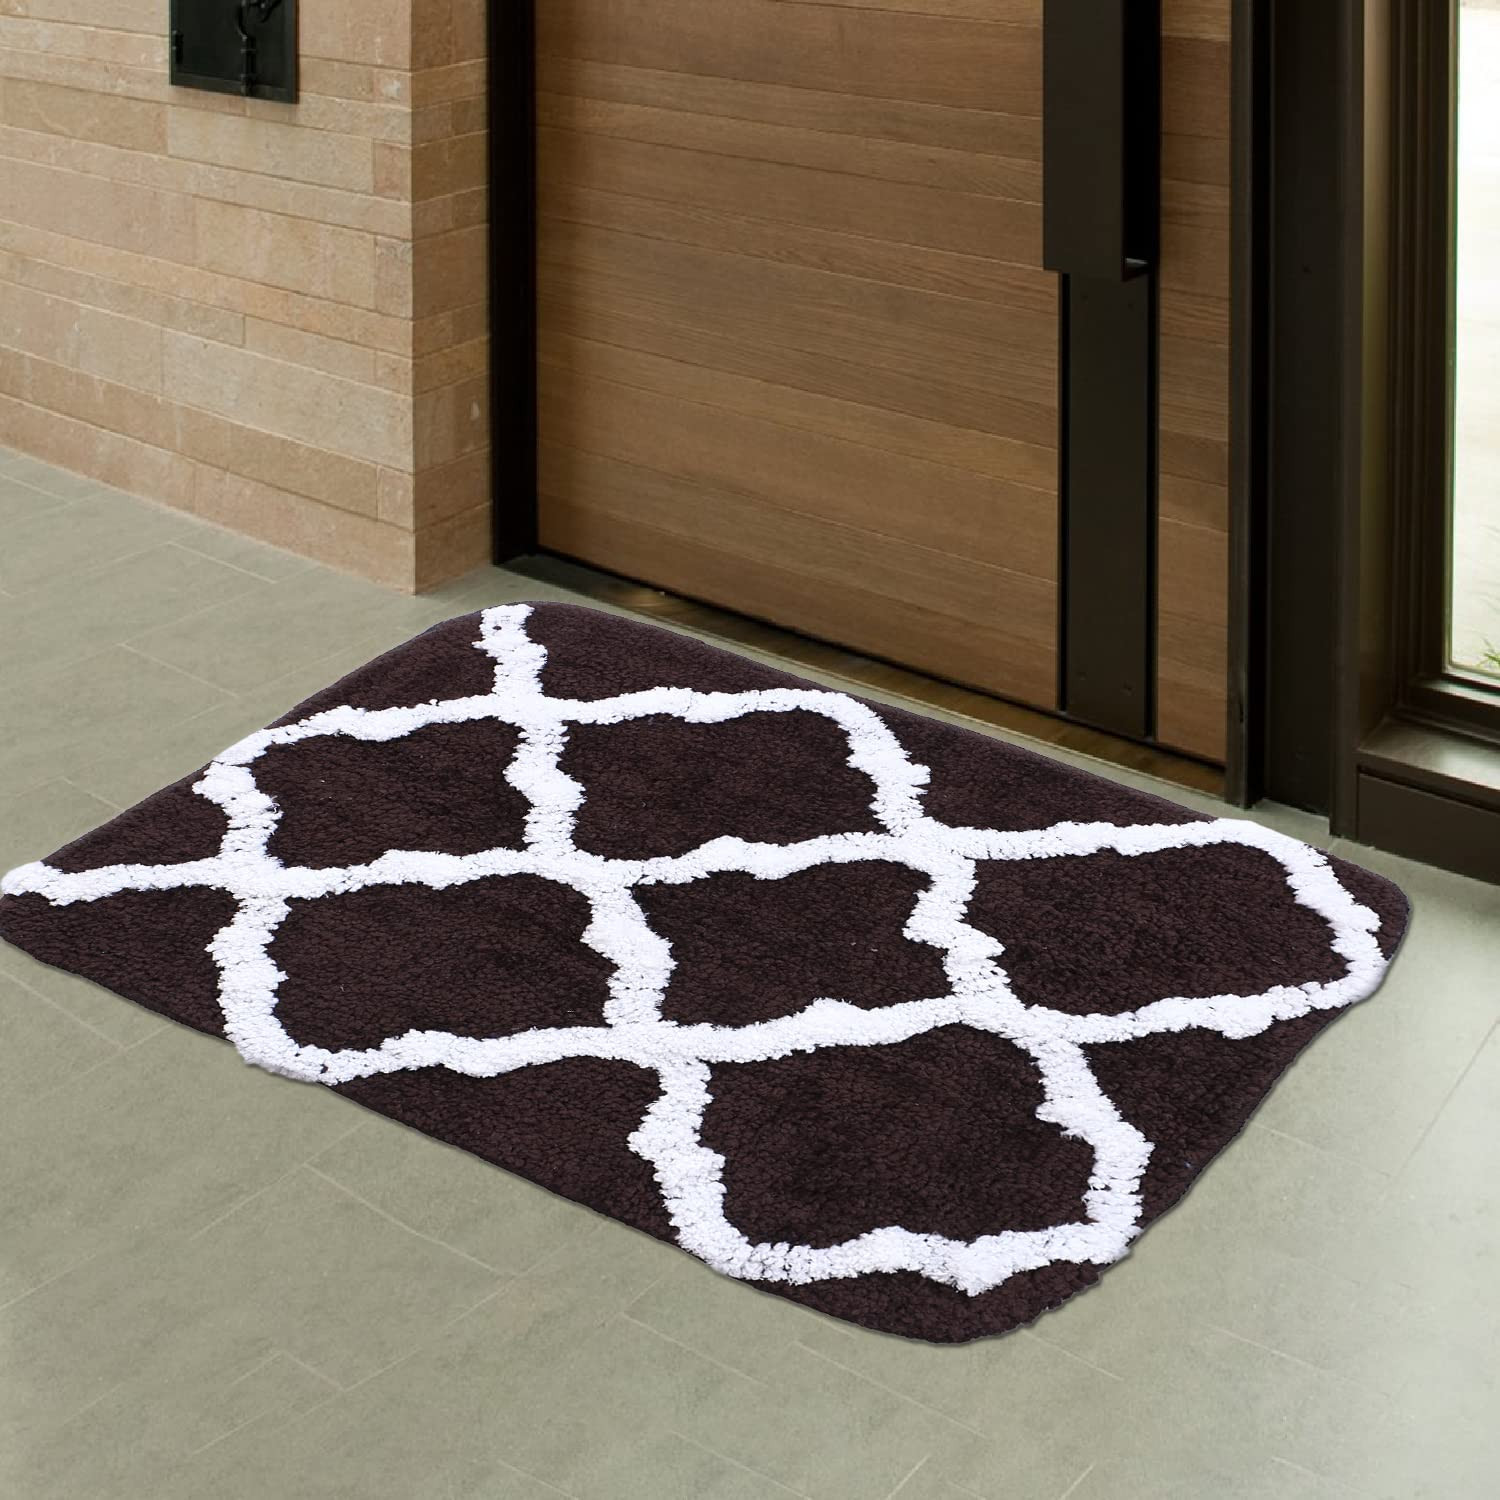 Kuber Industries Microfiber Doormats|Anti-Skid Water Absorbant Fluffy Floor mat|Geometric Pattern Entrance Mat for Kitchen,Bedside,Door,Living,Prayer Room,60x40 cm,Pack of 2 (Brown & Blue)